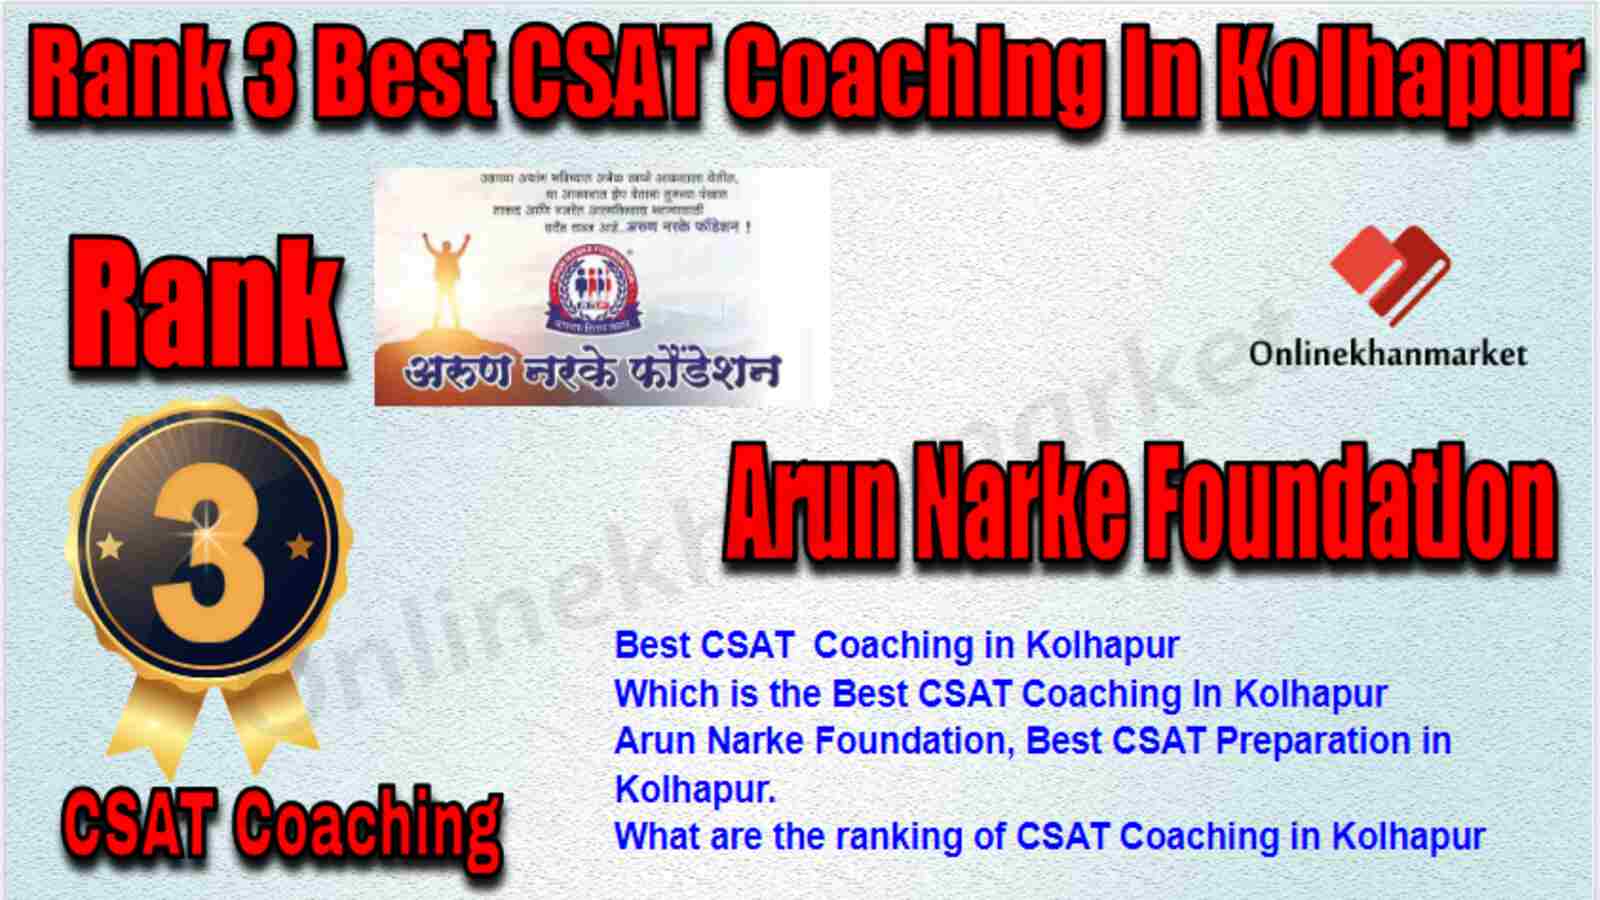 Rank 3 Best CSAT Coaching in Kolhapur